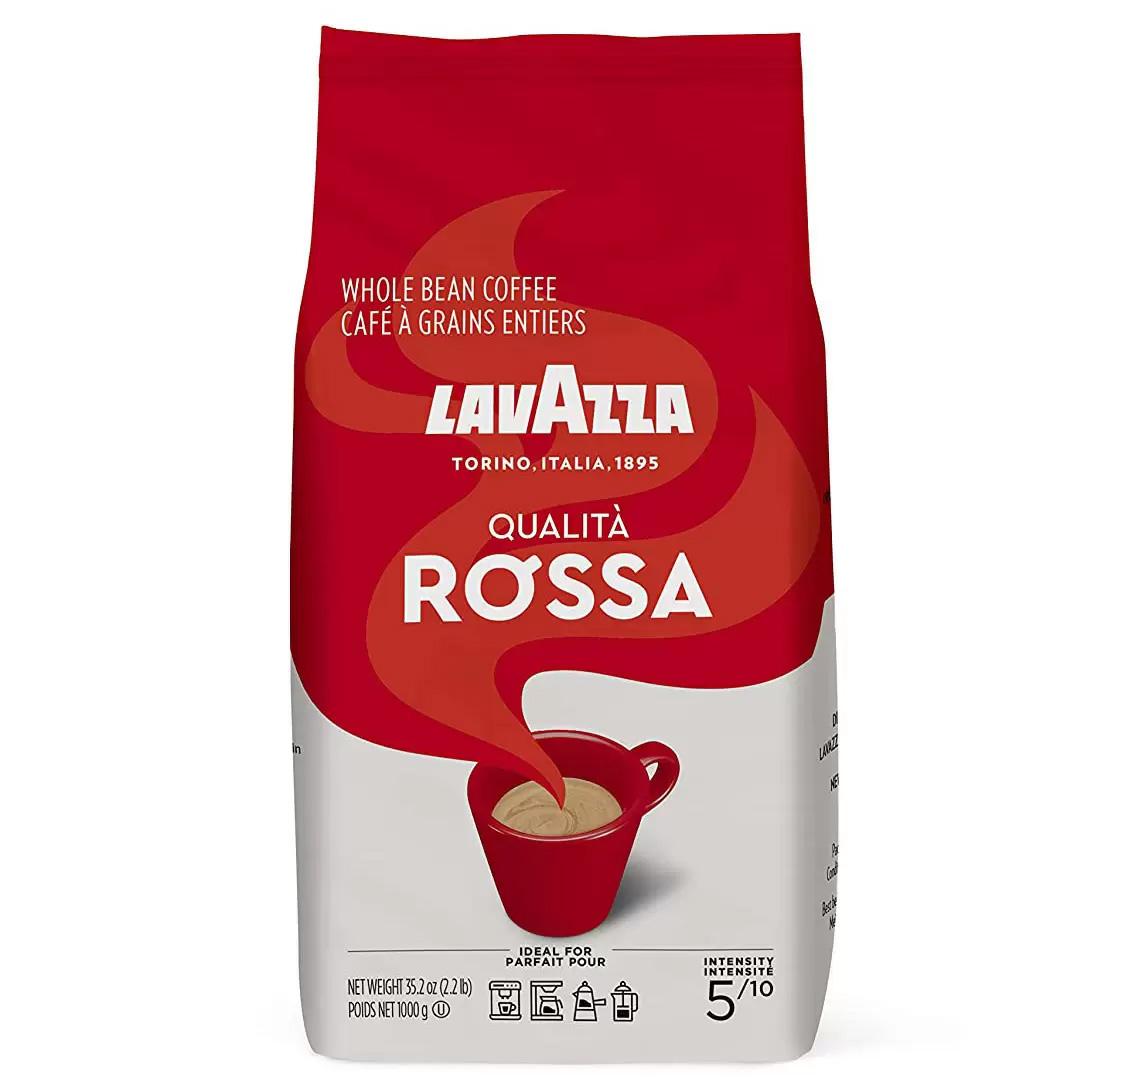 Lavazza Qualita Rossa Italian Coffee Beans Expresso for $12.38 Shipped